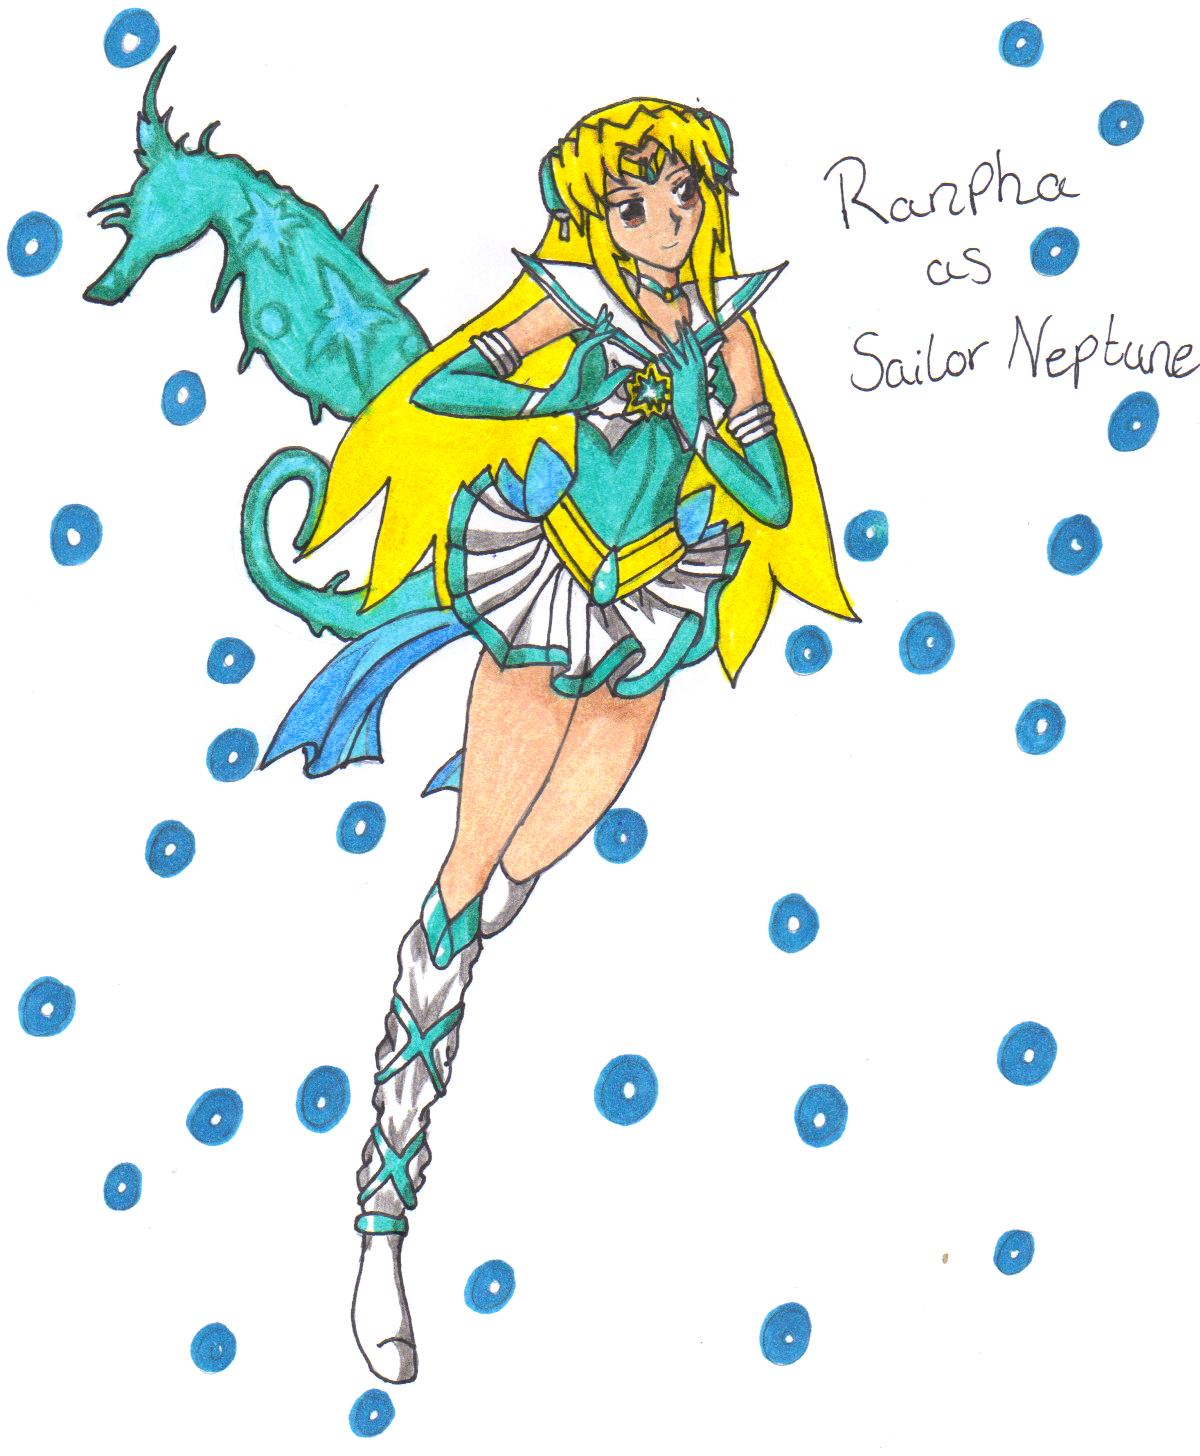 Ranpha as Sailor Neptune by setoXyamiKaiba4ever